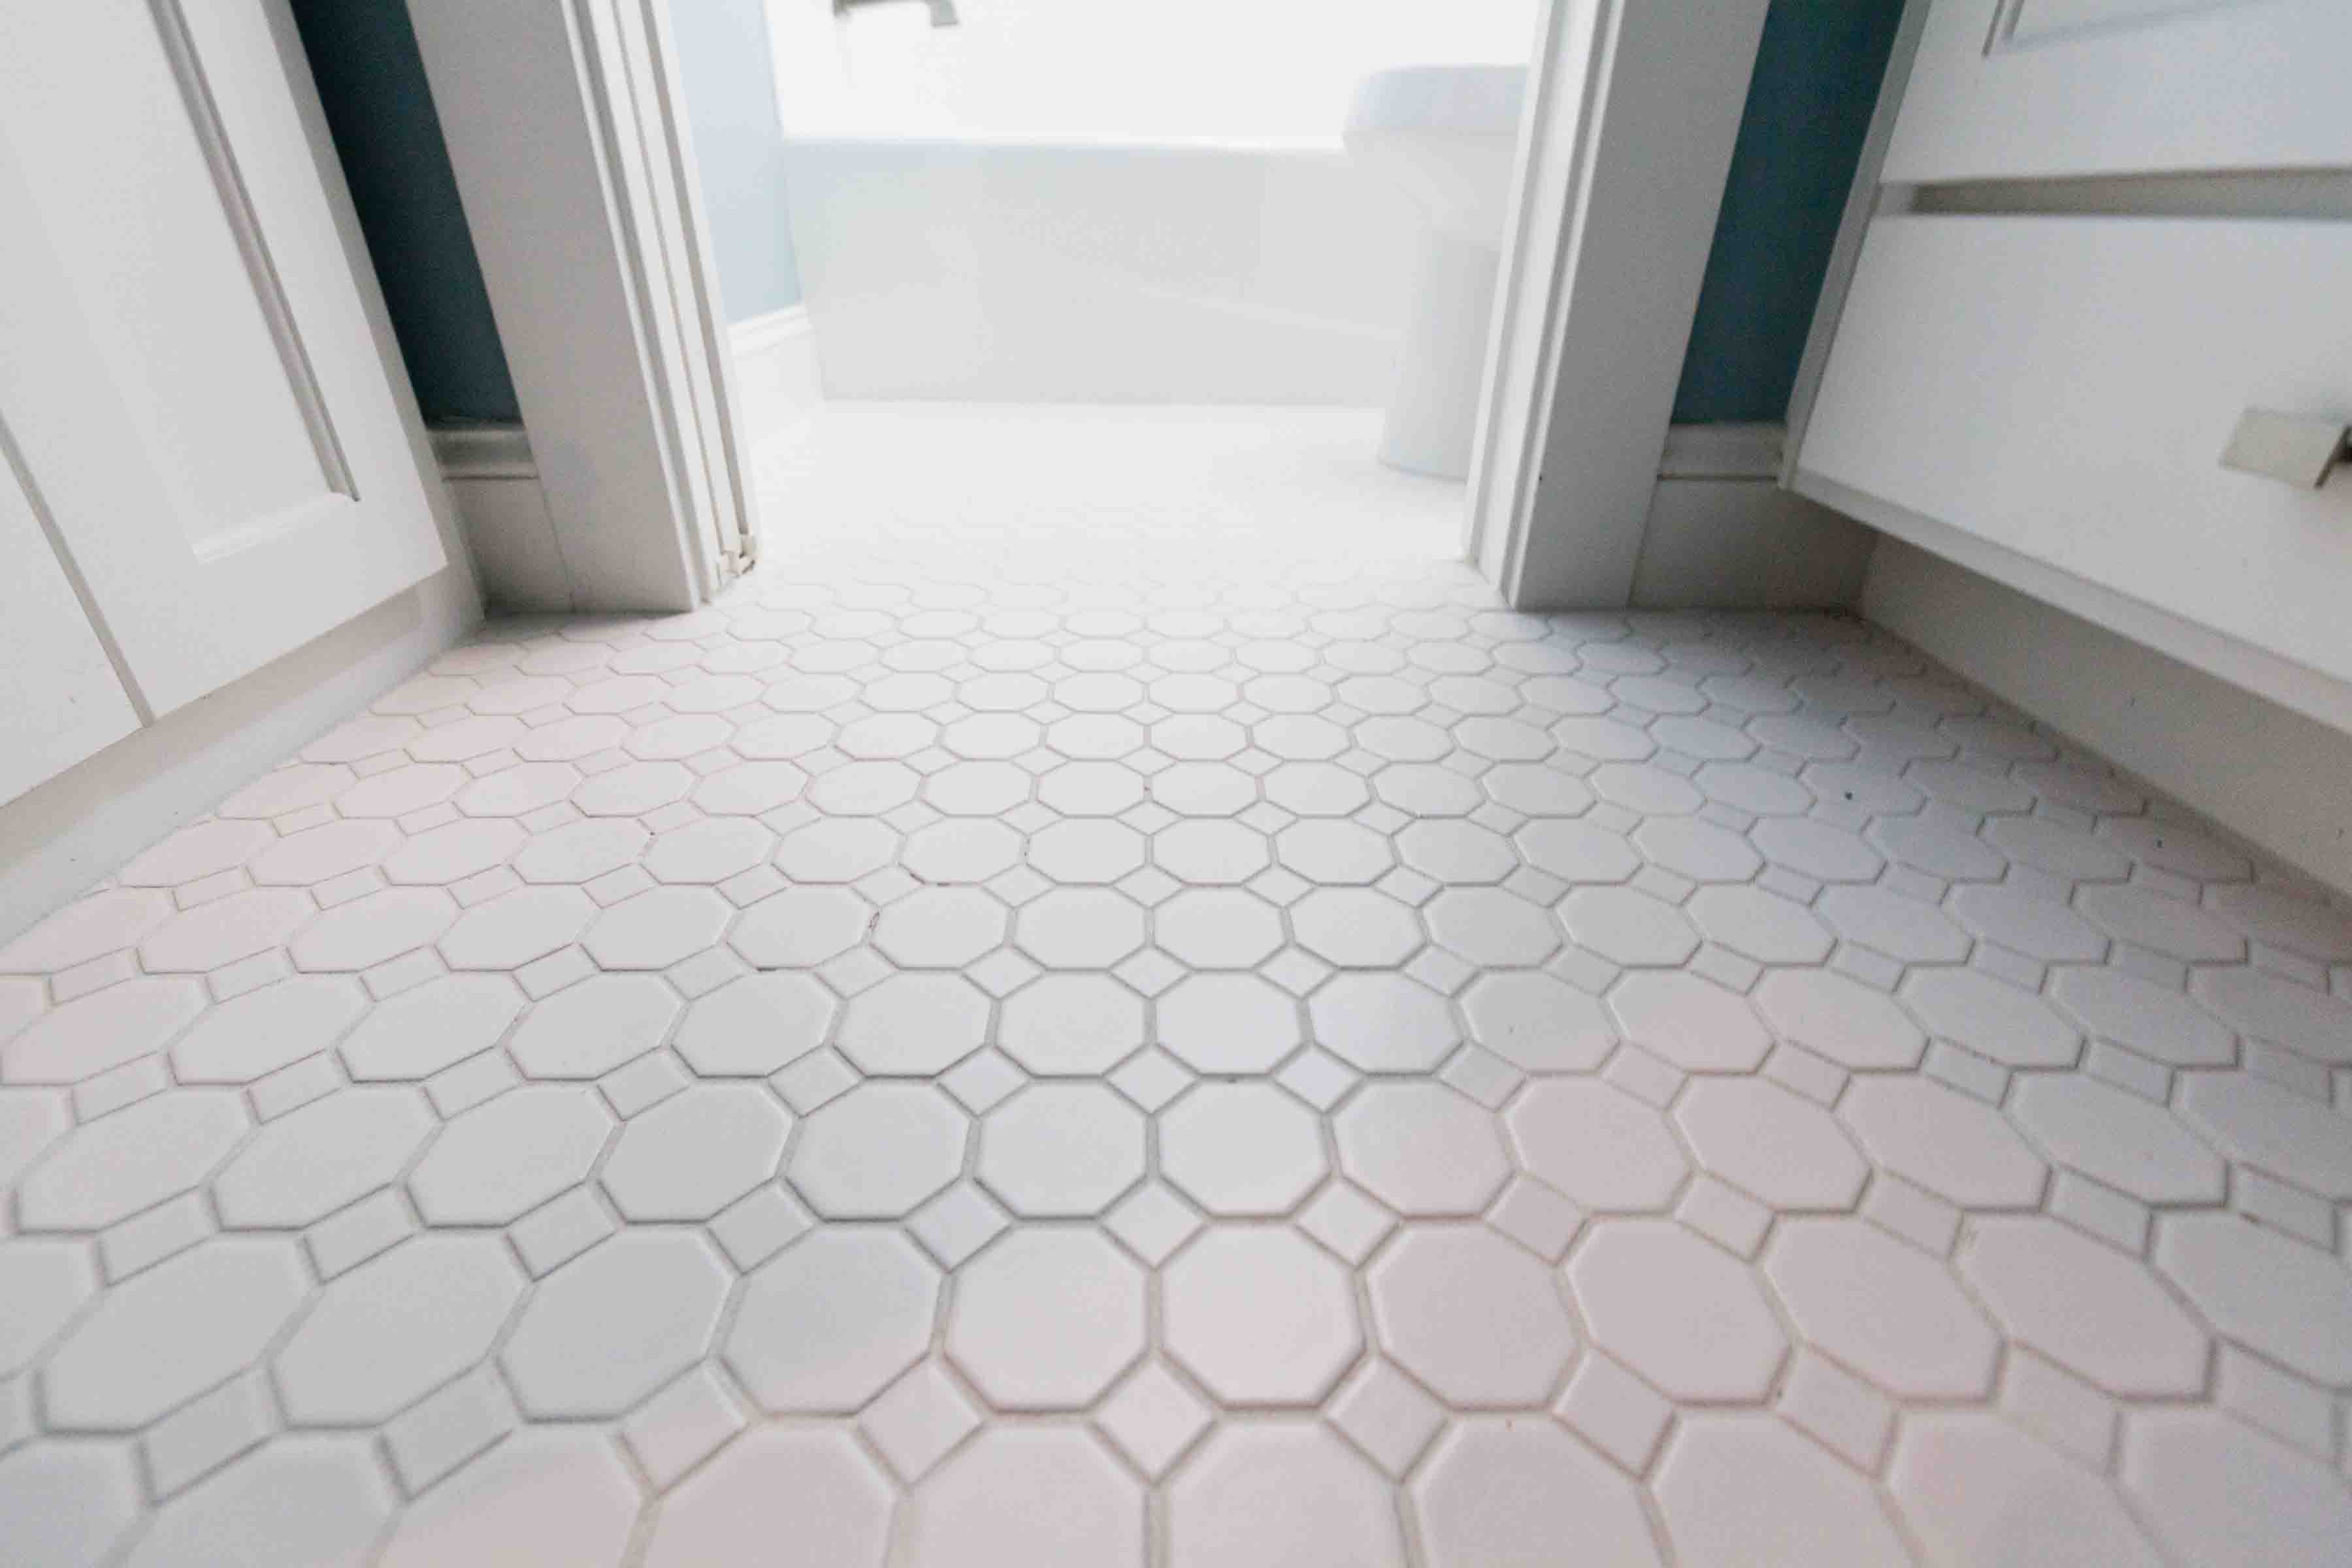 30 Pictures Of Octagon Bathroom Tile 2021, Octagon Bathroom Tile